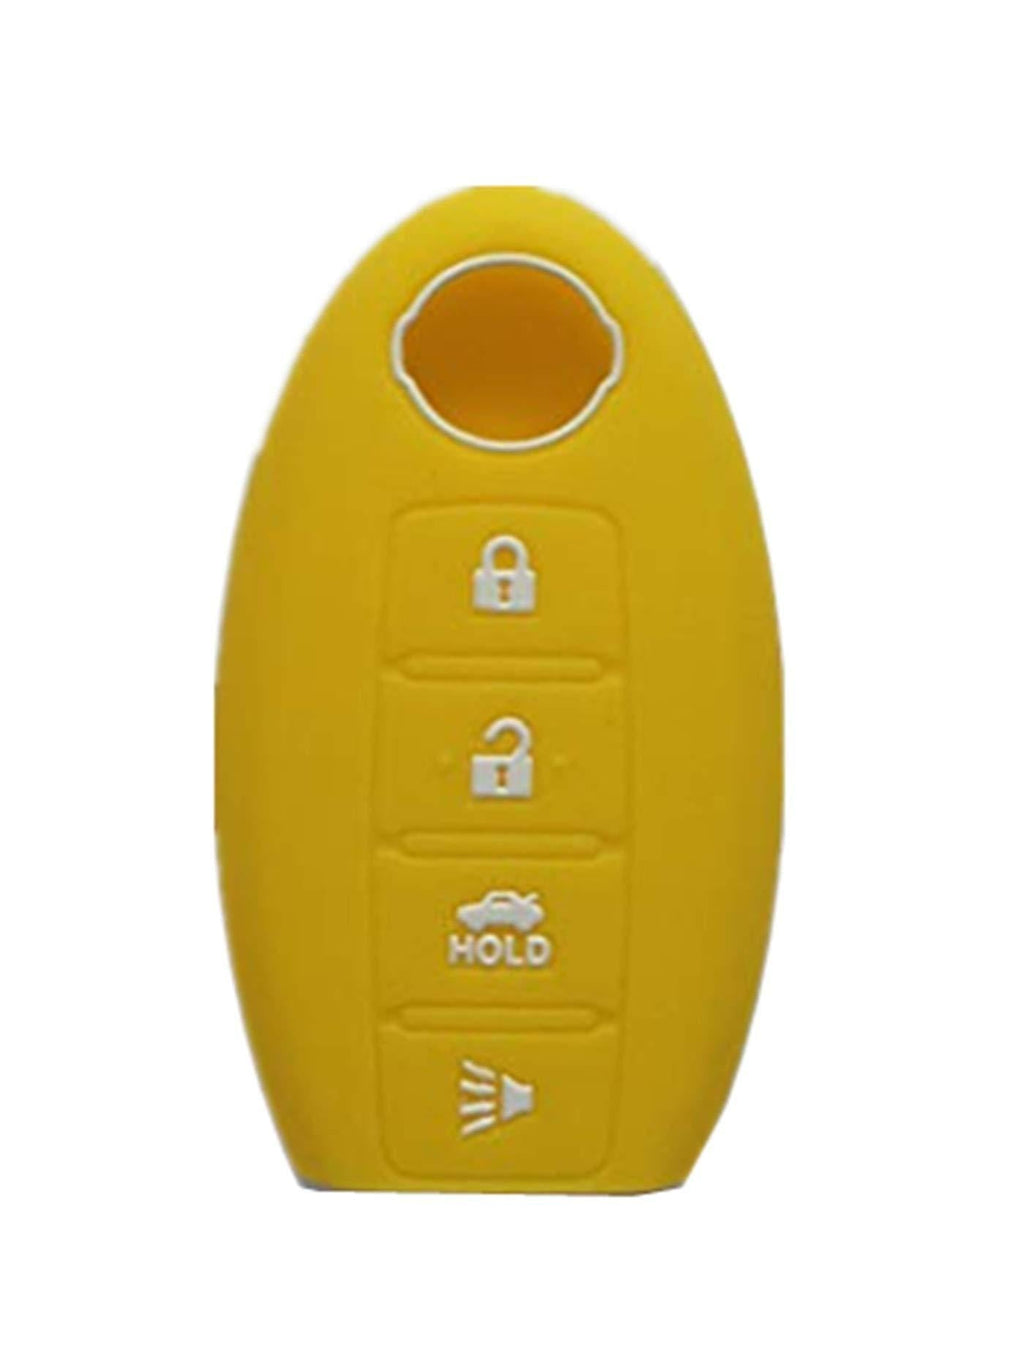  [AUSTRALIA] - KAWIHEN Silicone 4 buttons Keyless Entry Smart Remote Key Fob Cover Protector For Nissan 350Z 370Z Altima Armada GT-R Leaf Pathfinder Rogue Sentra Maxima Murano Versa CWTWB1U840 285E3-3SG0D (yellow)